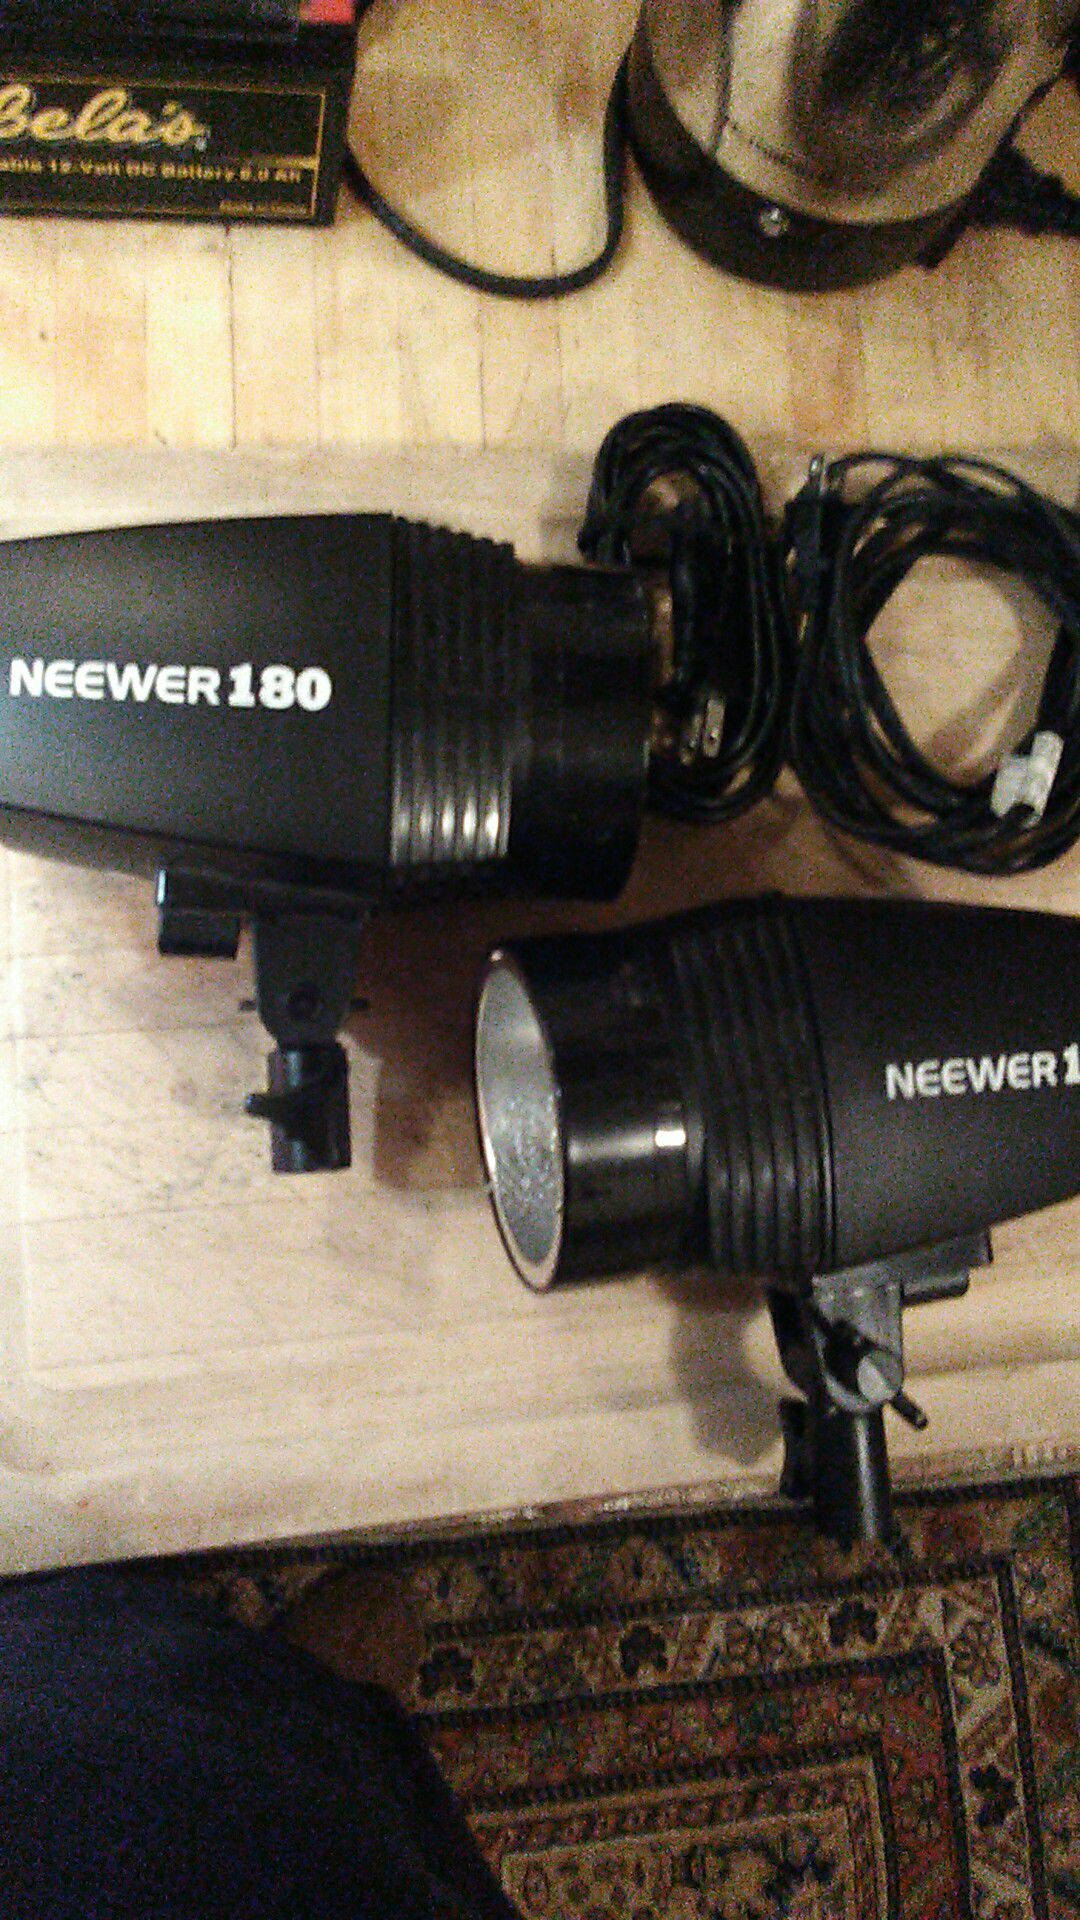 Neewer 180 photography strobe lights x2